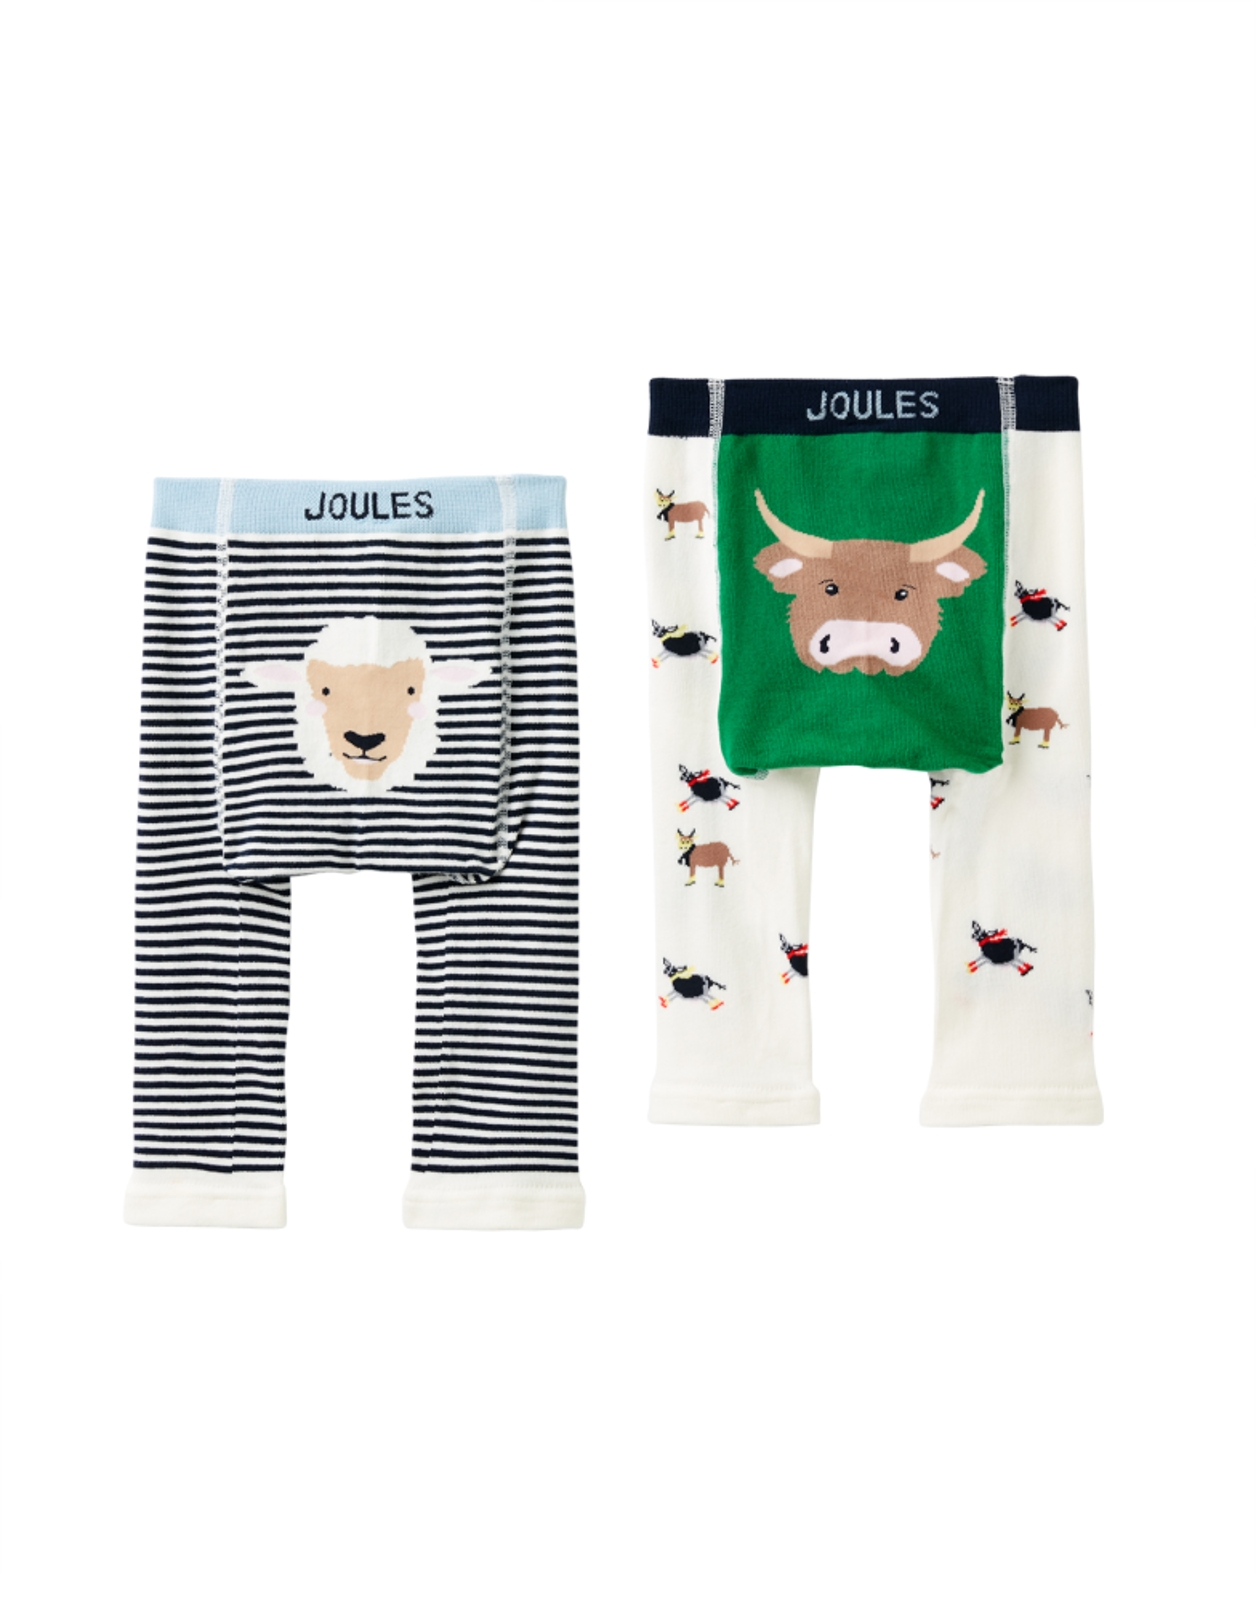 https://www.hopskotch.co.uk/img/product/joules-lively-leggings-boys-2-pair-character-knit-leggings-multi-cow-sheep-612-months-3007803-1600.jpg